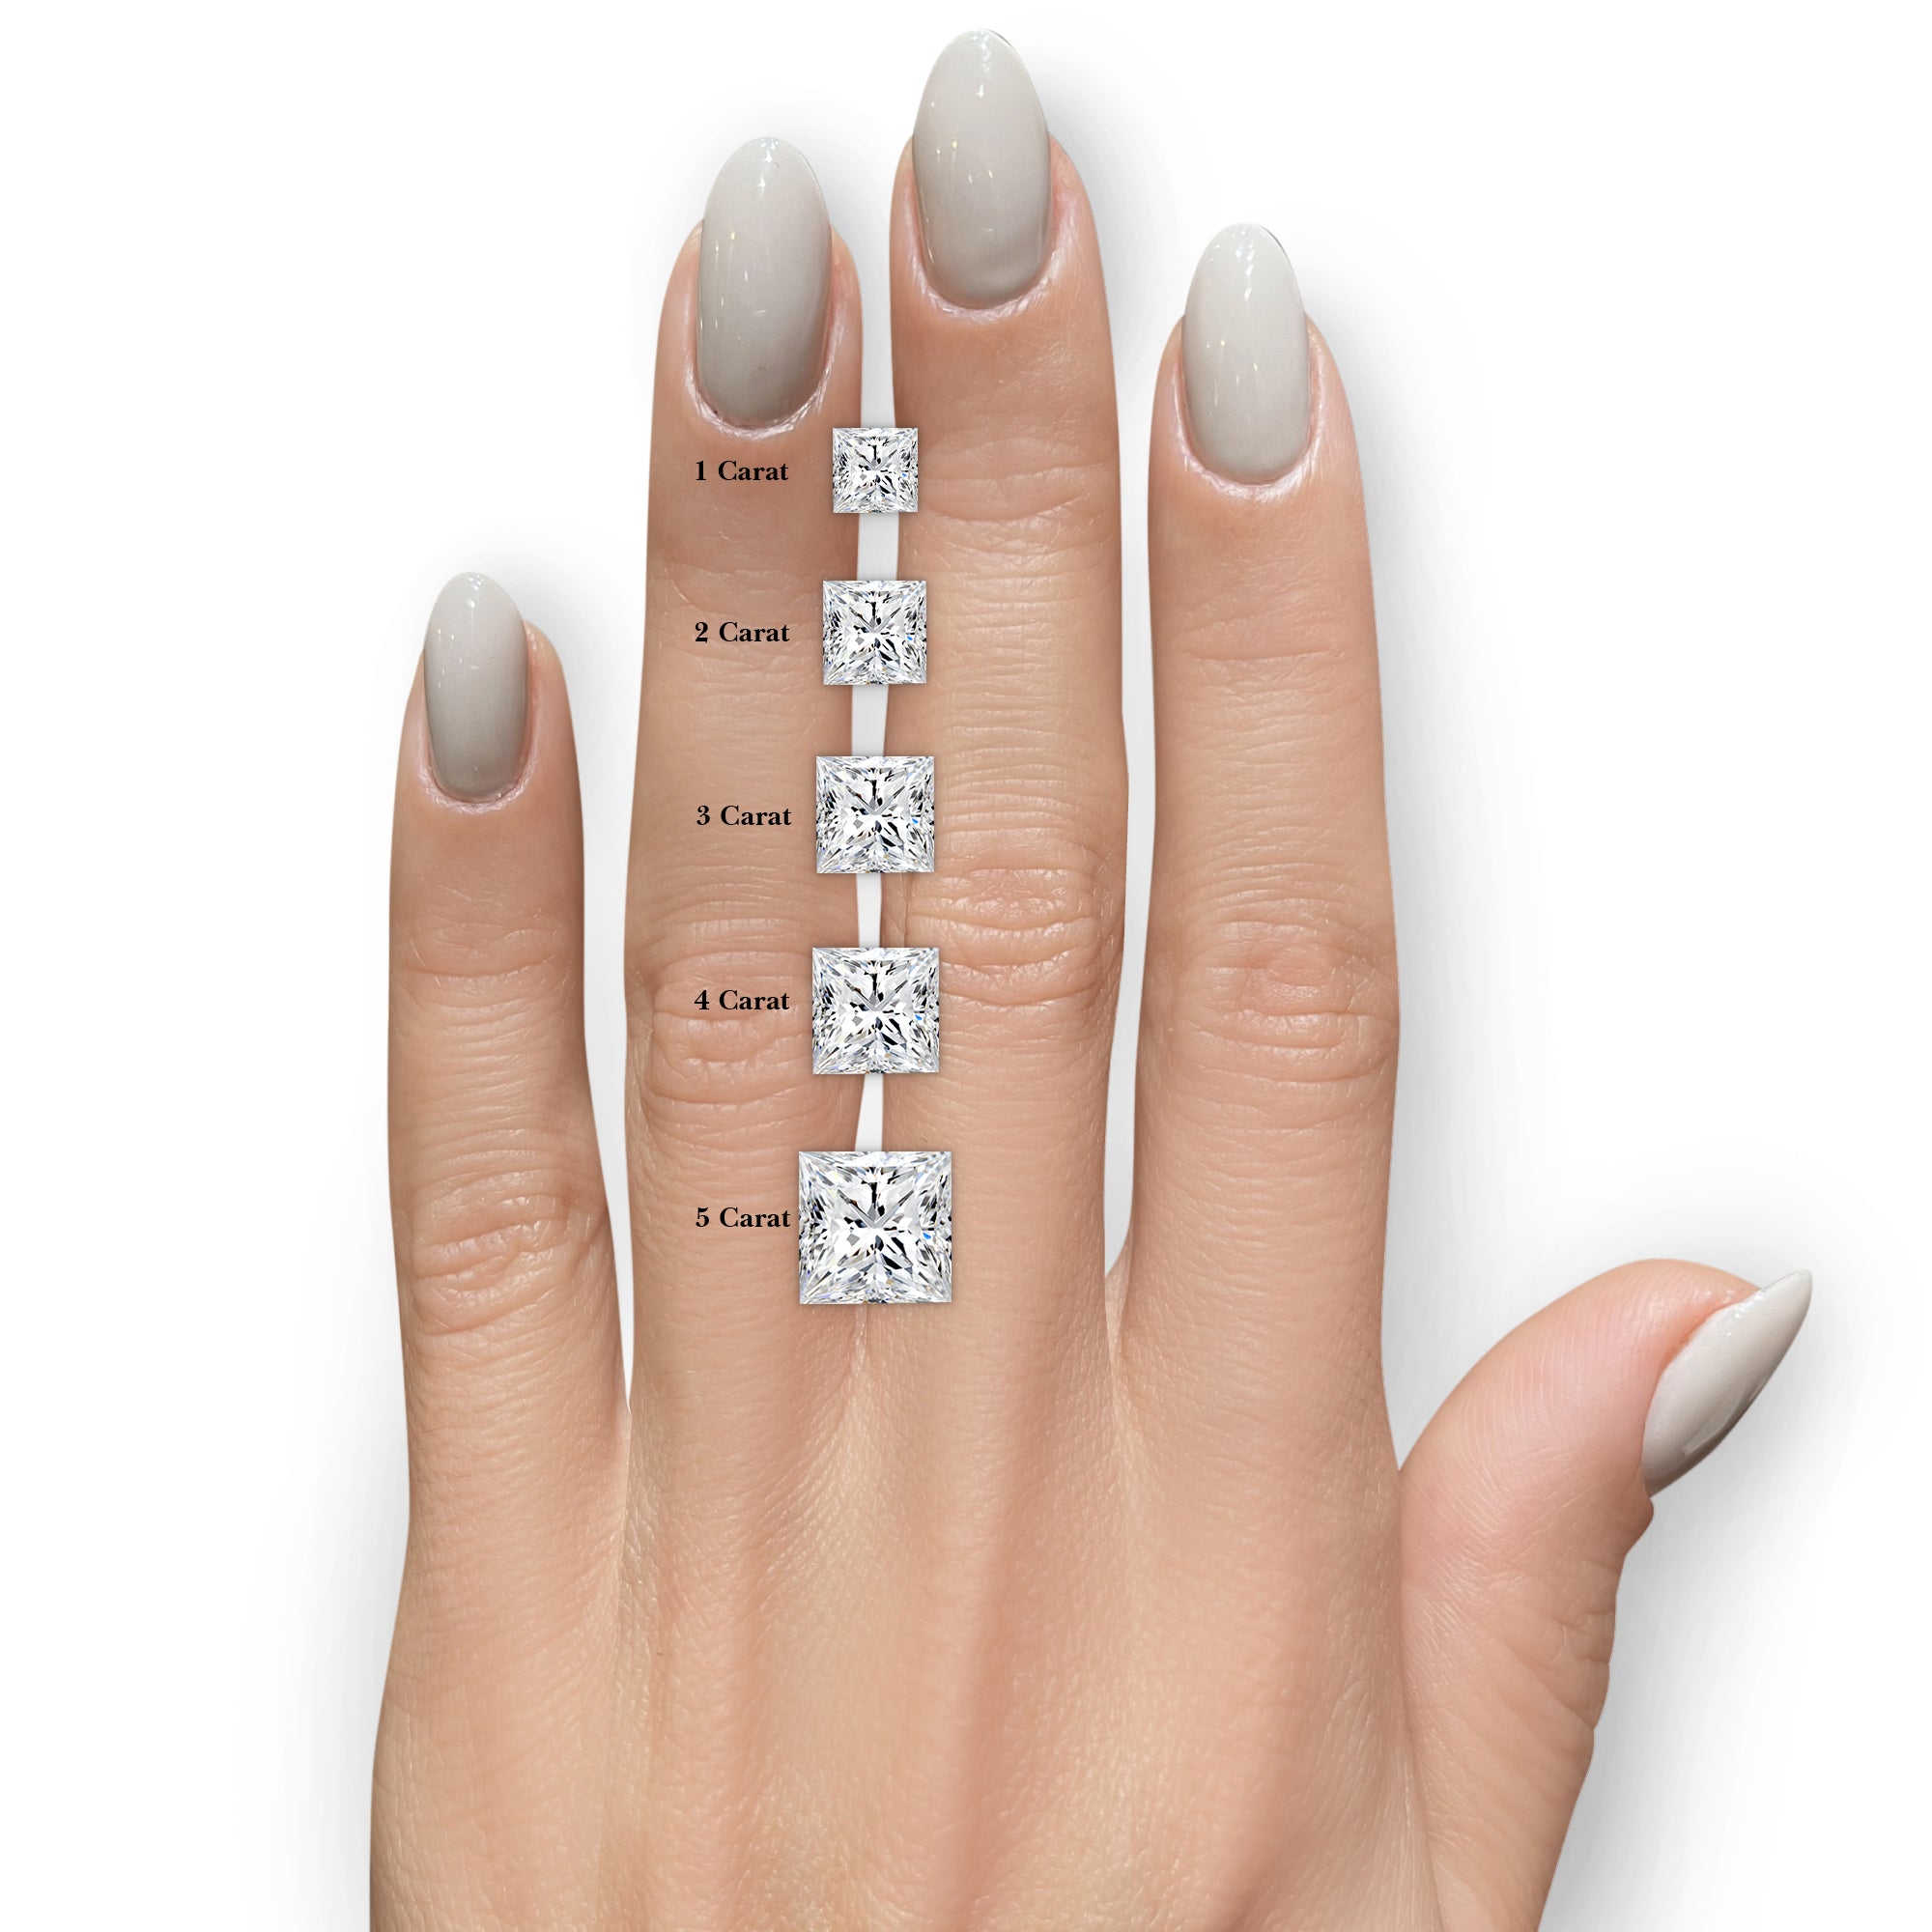 Valentina Lab Grown Diamond Bridal Set -14K White Gold